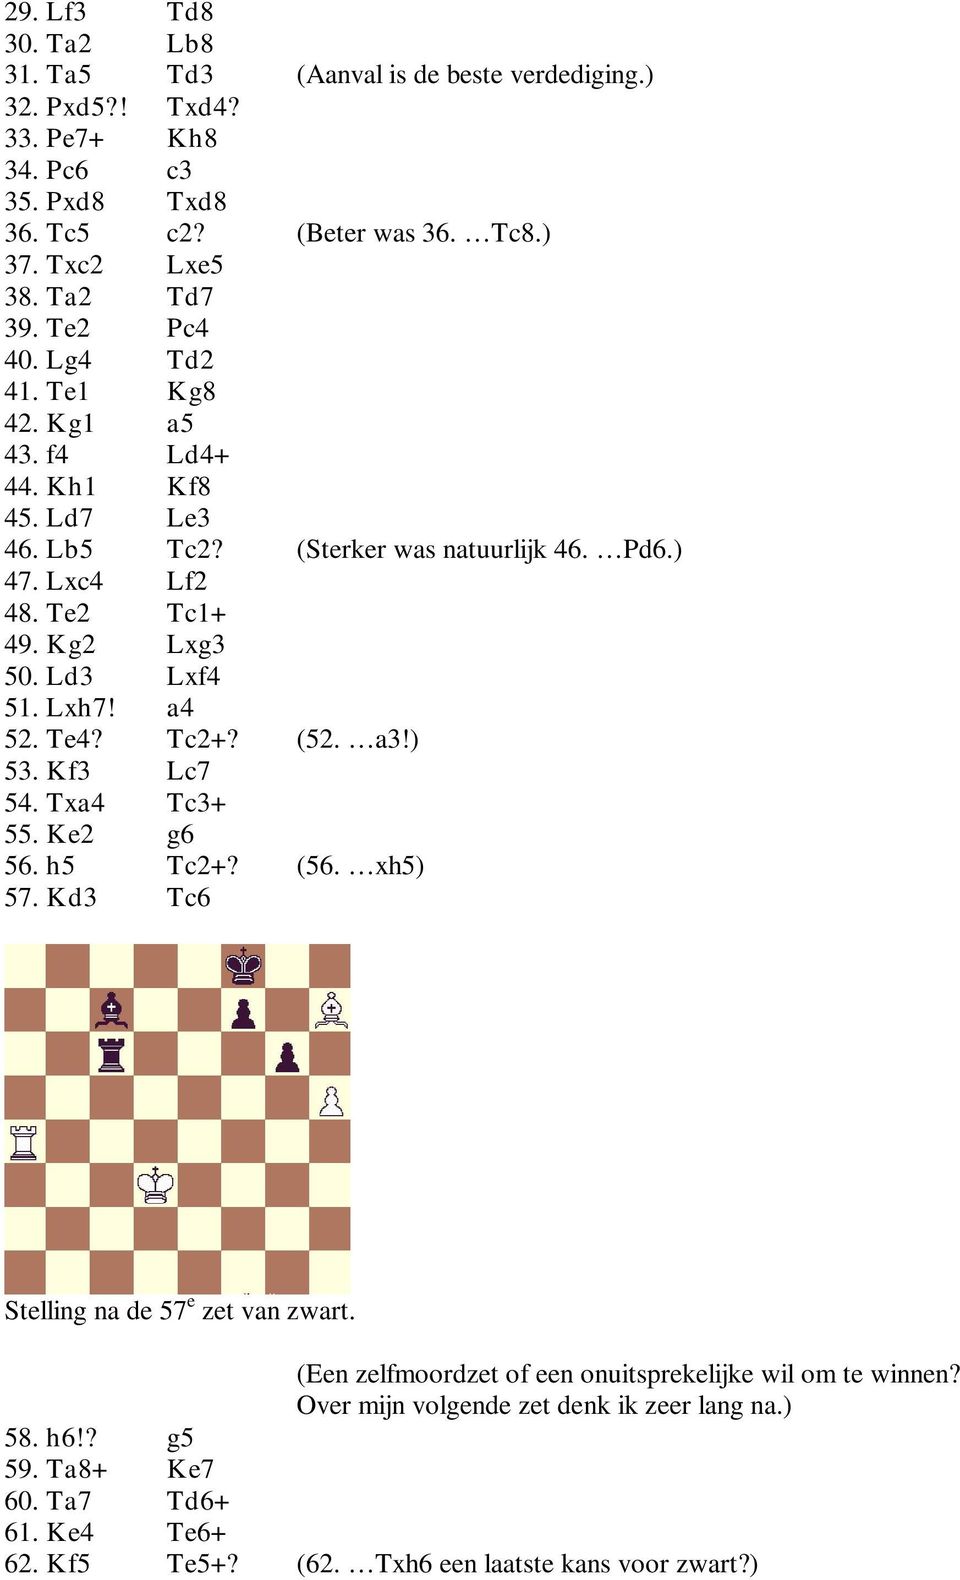 Ld3 Lxf4 51. Lxh7! a4 52. Te4? Tc2+? (52. a3!) 53. Kf3 Lc7 54. Txa4 Tc3+ 55. Ke2 g6 56. h5 Tc2+? (56. xh5) 57. Kd3 Tc6 Stelling na de 57 e zet van zwart.